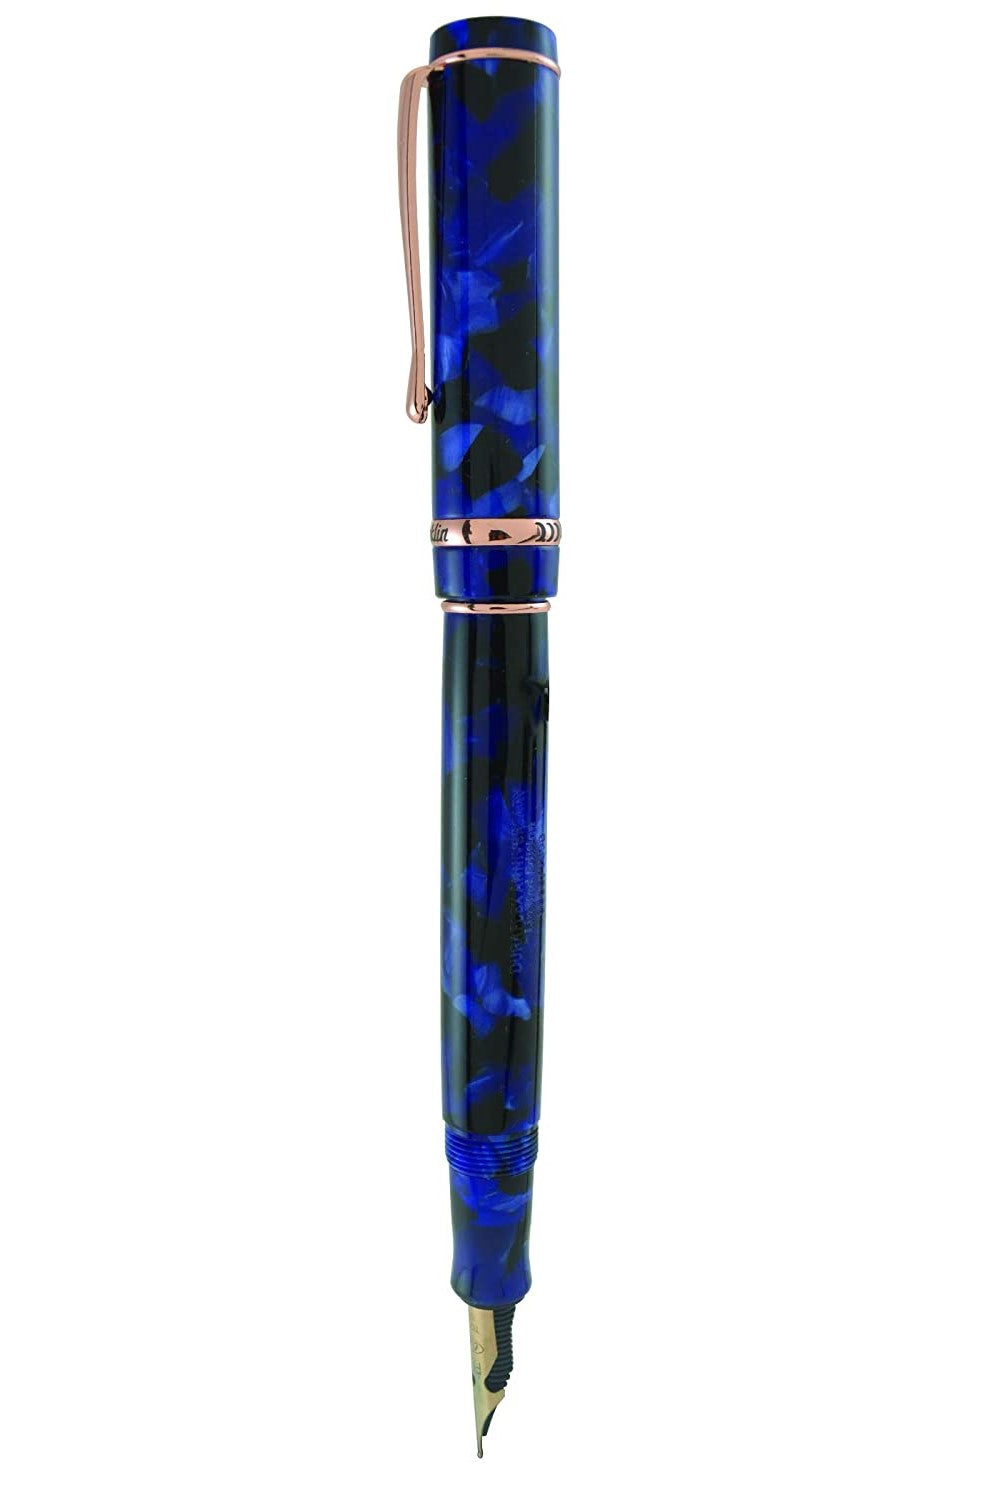 Conklin Duraflex 120th Anniversary Fountain Pen OmniFlex Nib (Limited Edition)